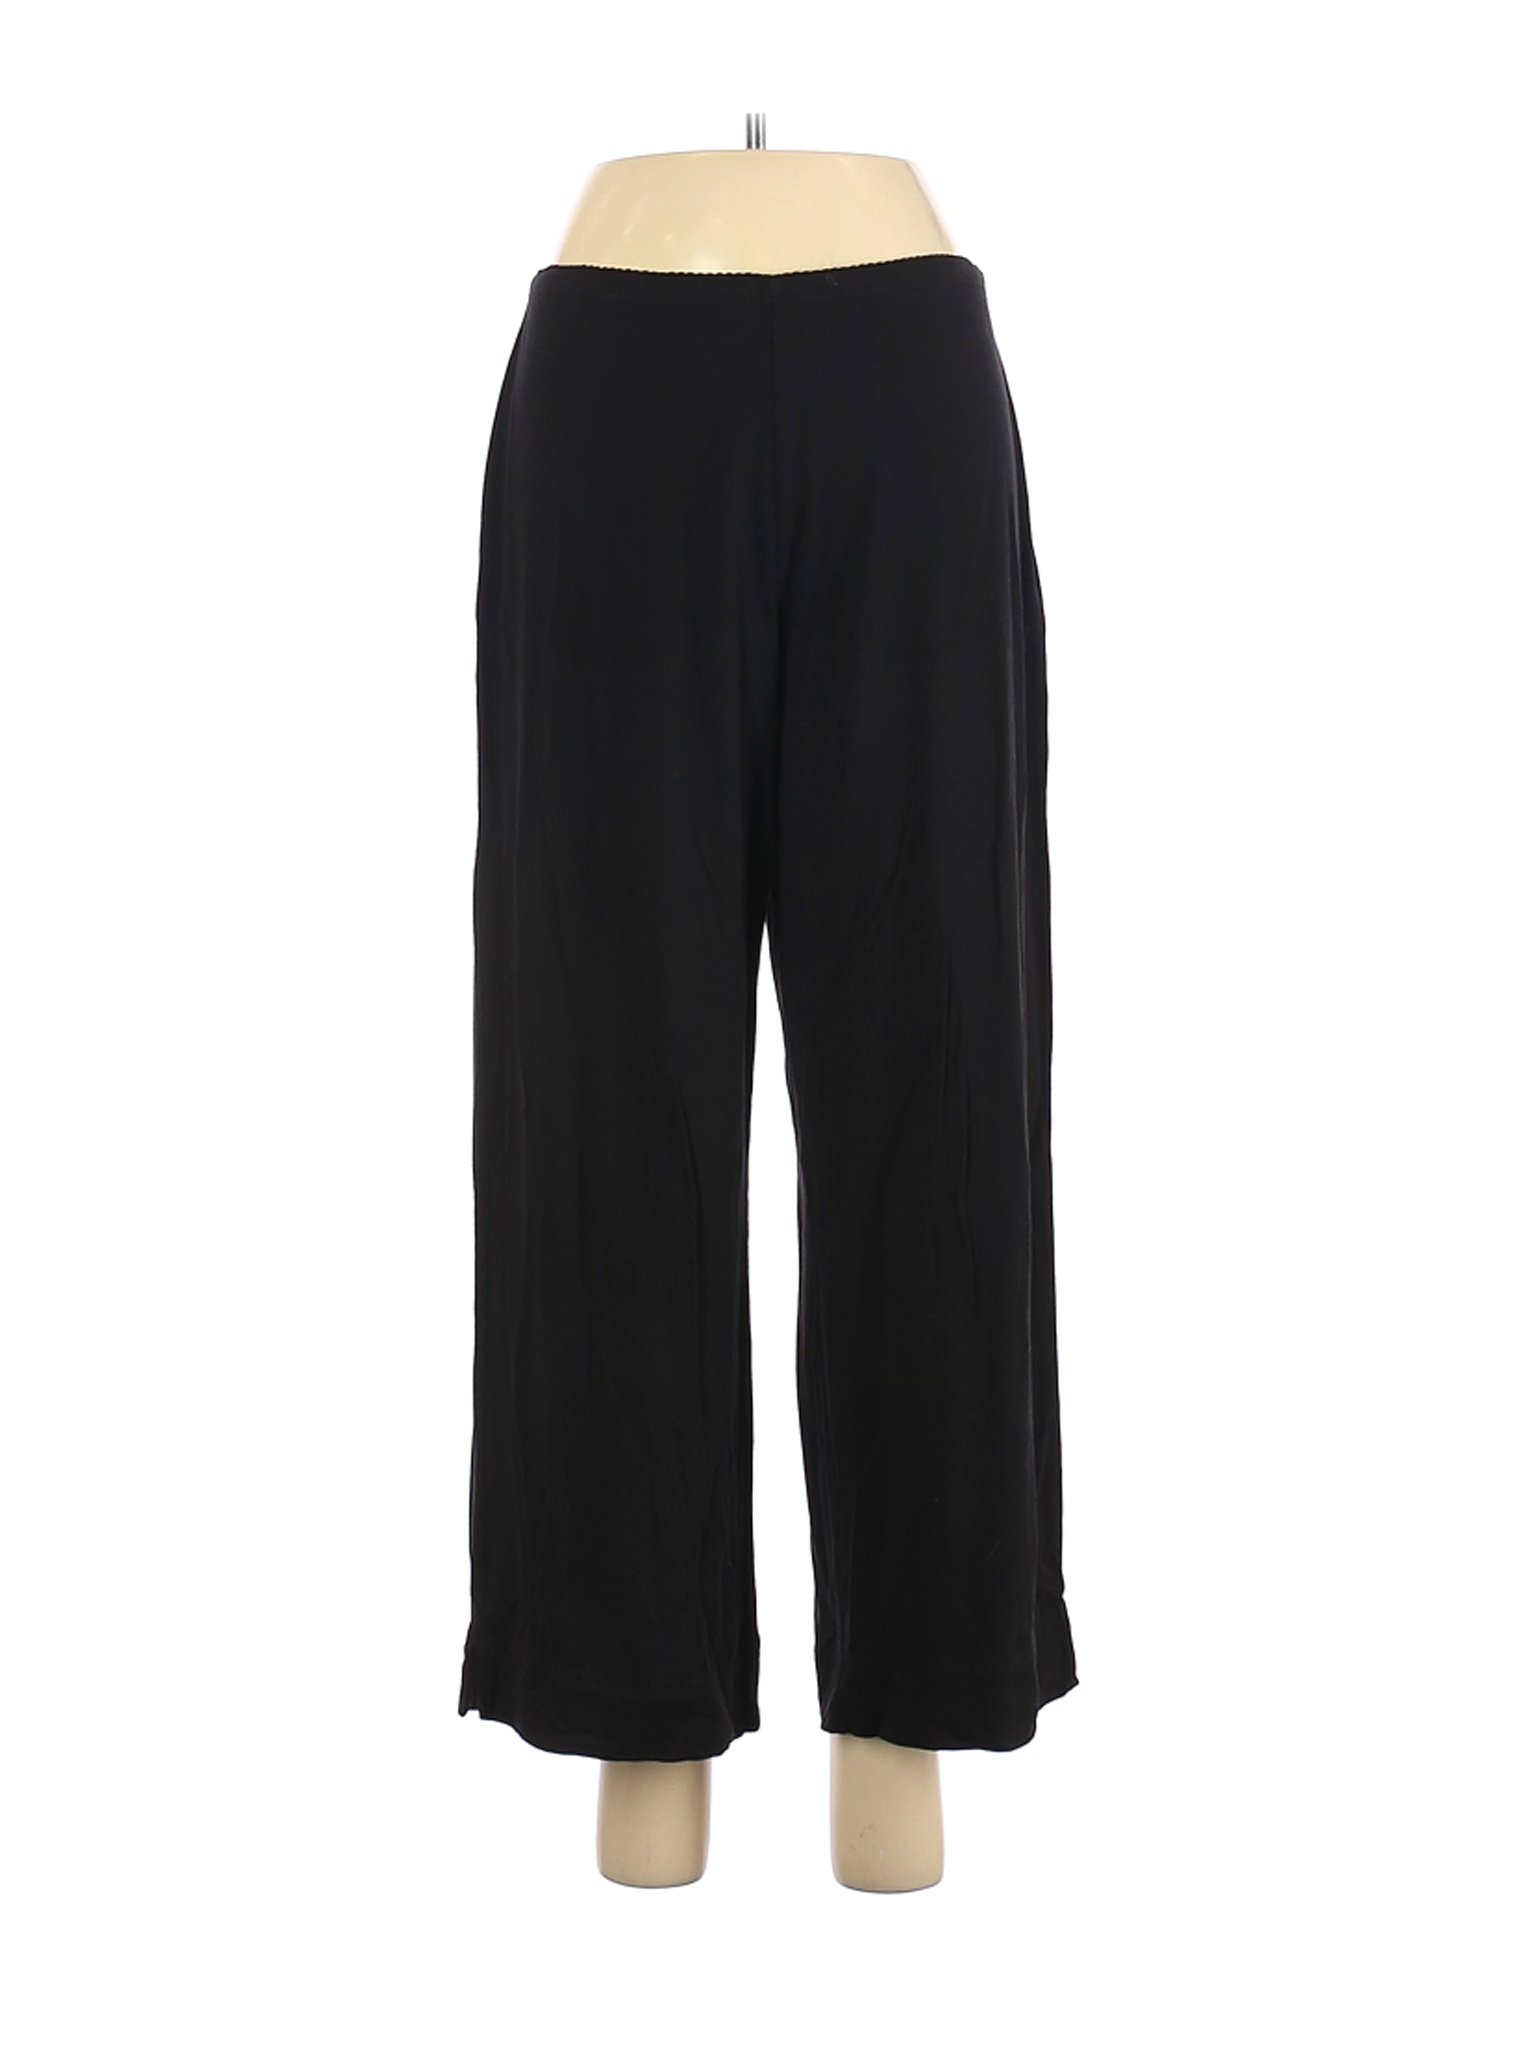 J.Jill Women Black Casual Pants M Petites | eBay